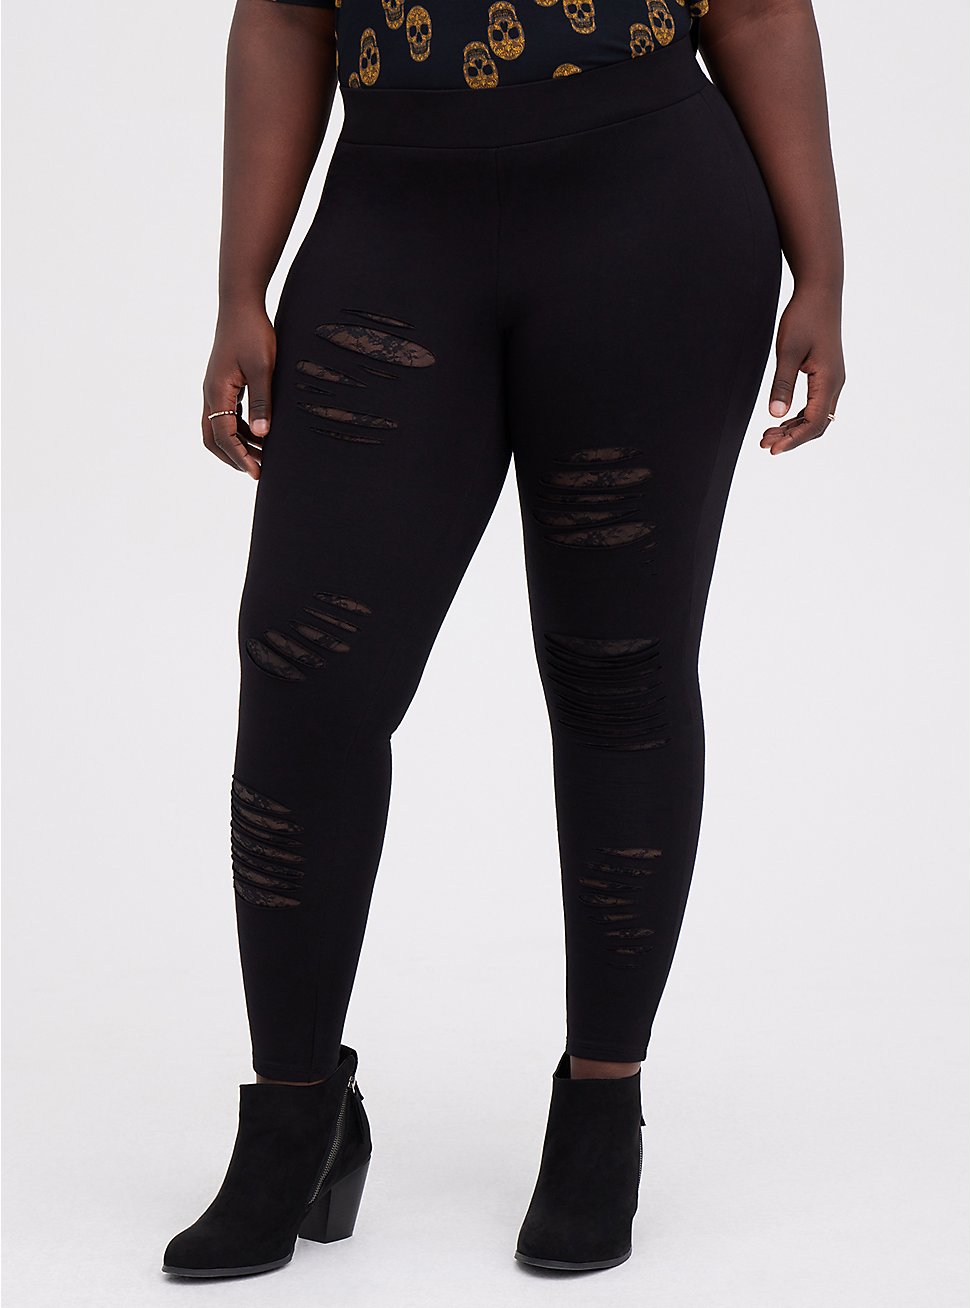 Premium Legging - Slashed Lace Underlay Black, BLACK, hi-res